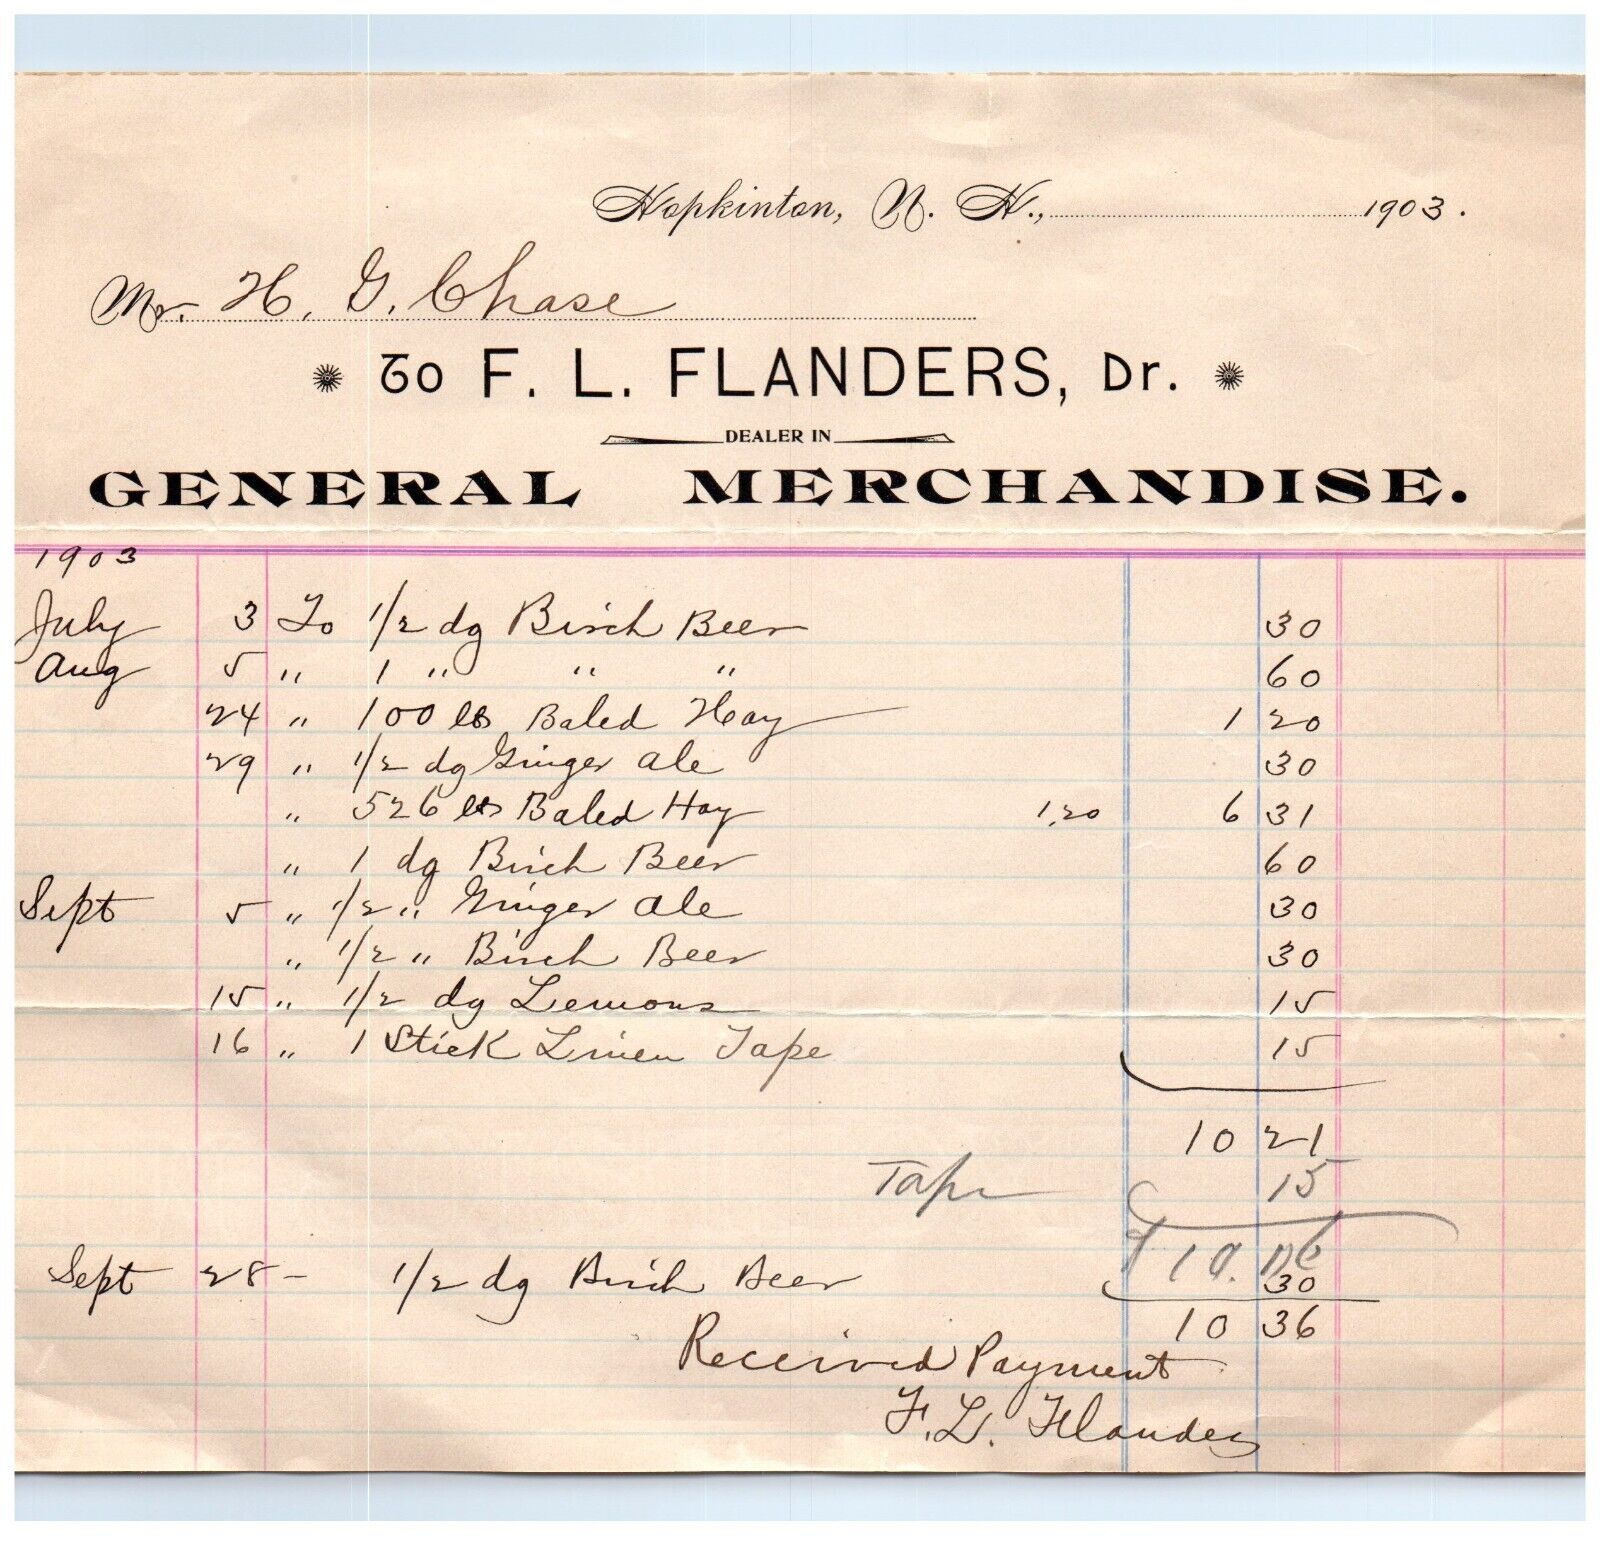 Hopkinton NH F.L. Flanders General Merchandise 1903 Letterhead Receipt H.G Chase